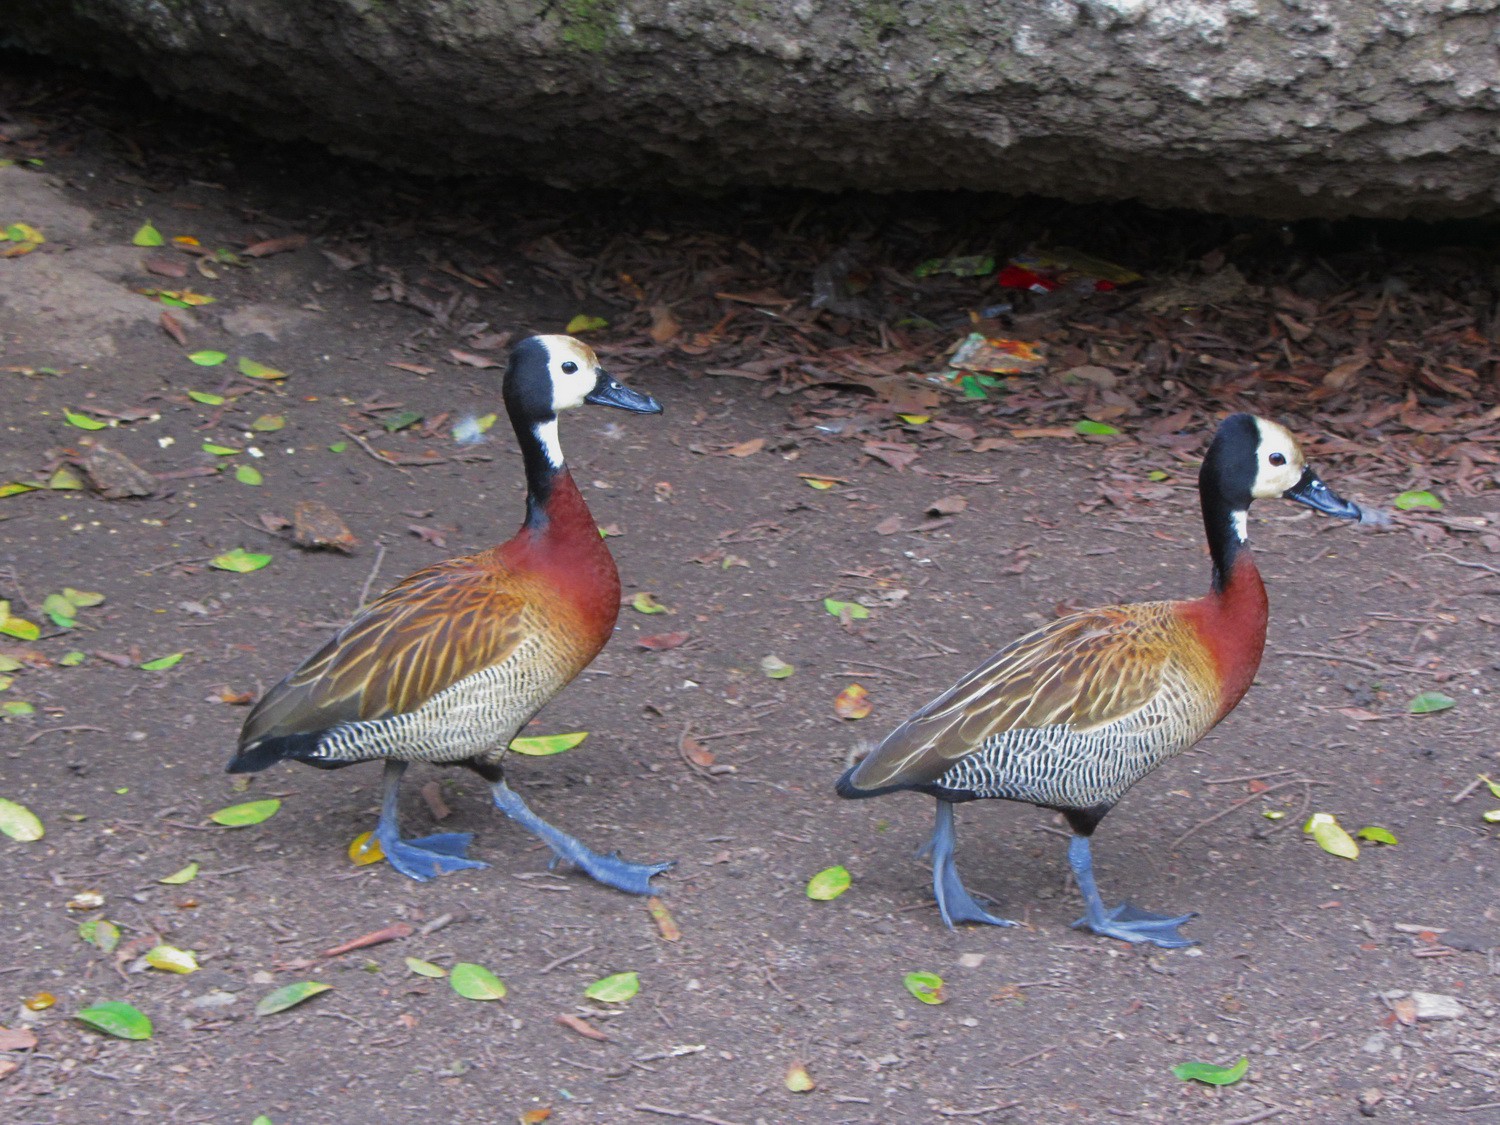 Ducks with blue feet in the Placa da Republica